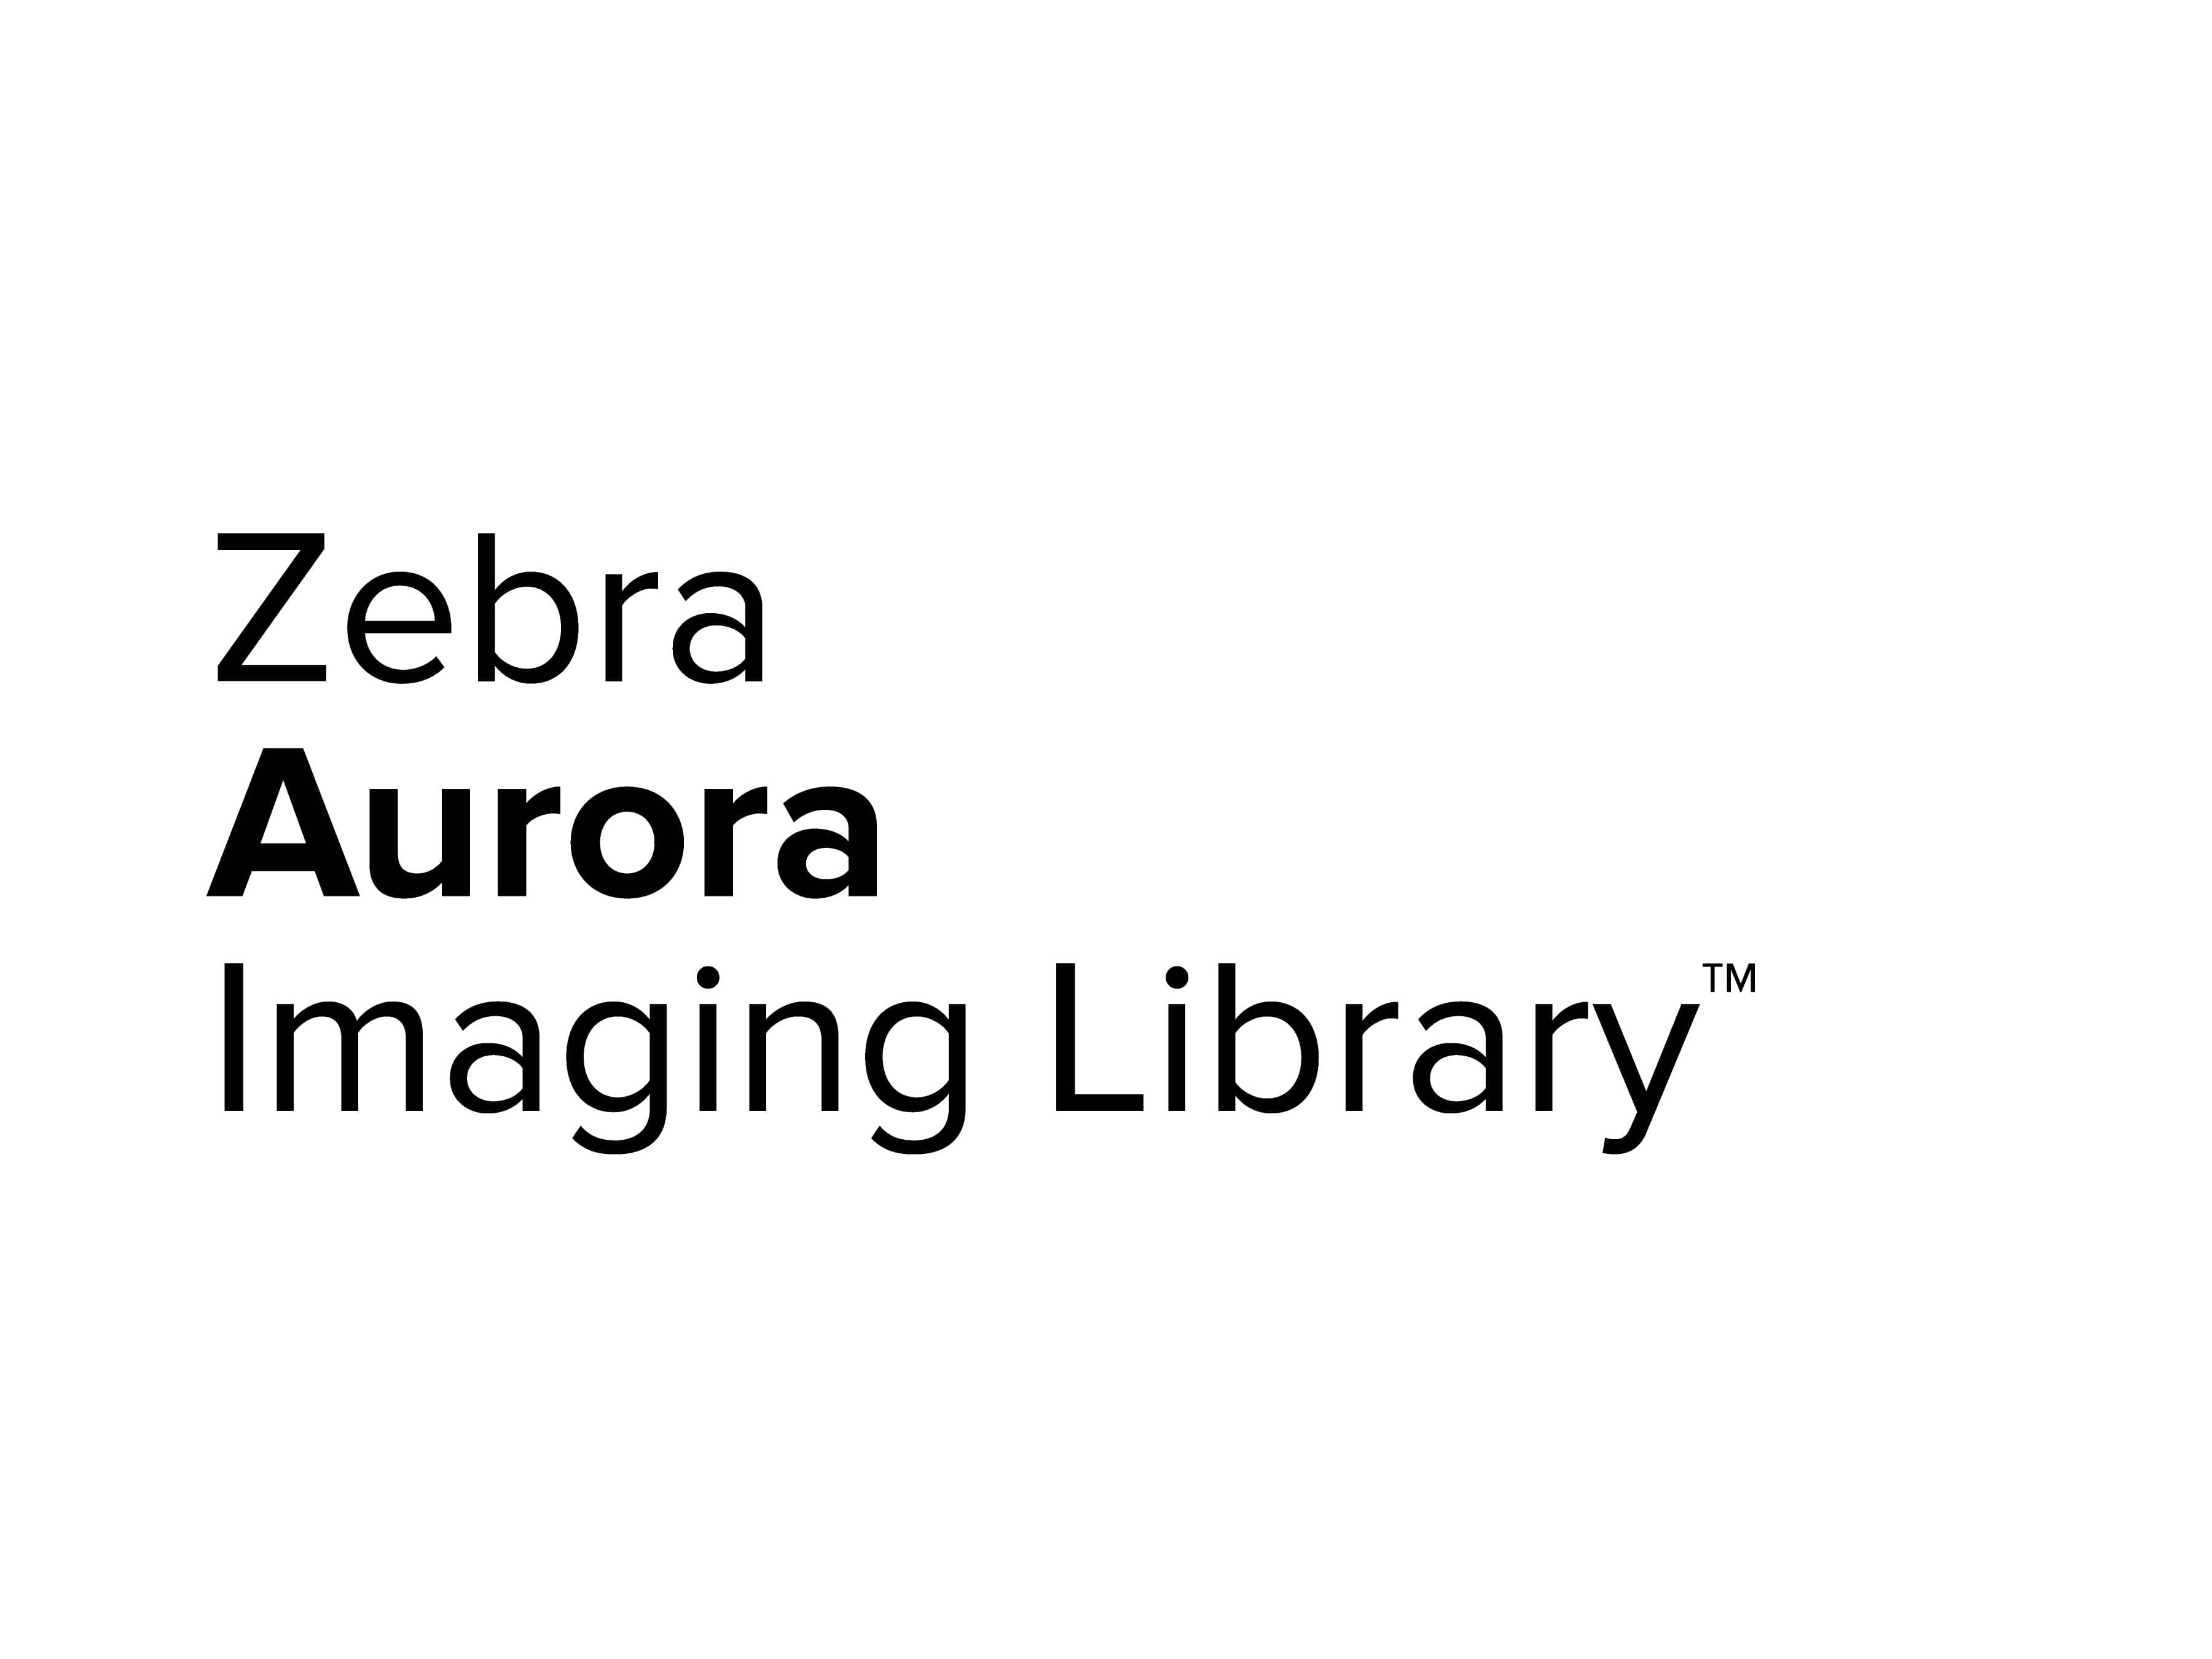 Zebra Aurora Imaging Library